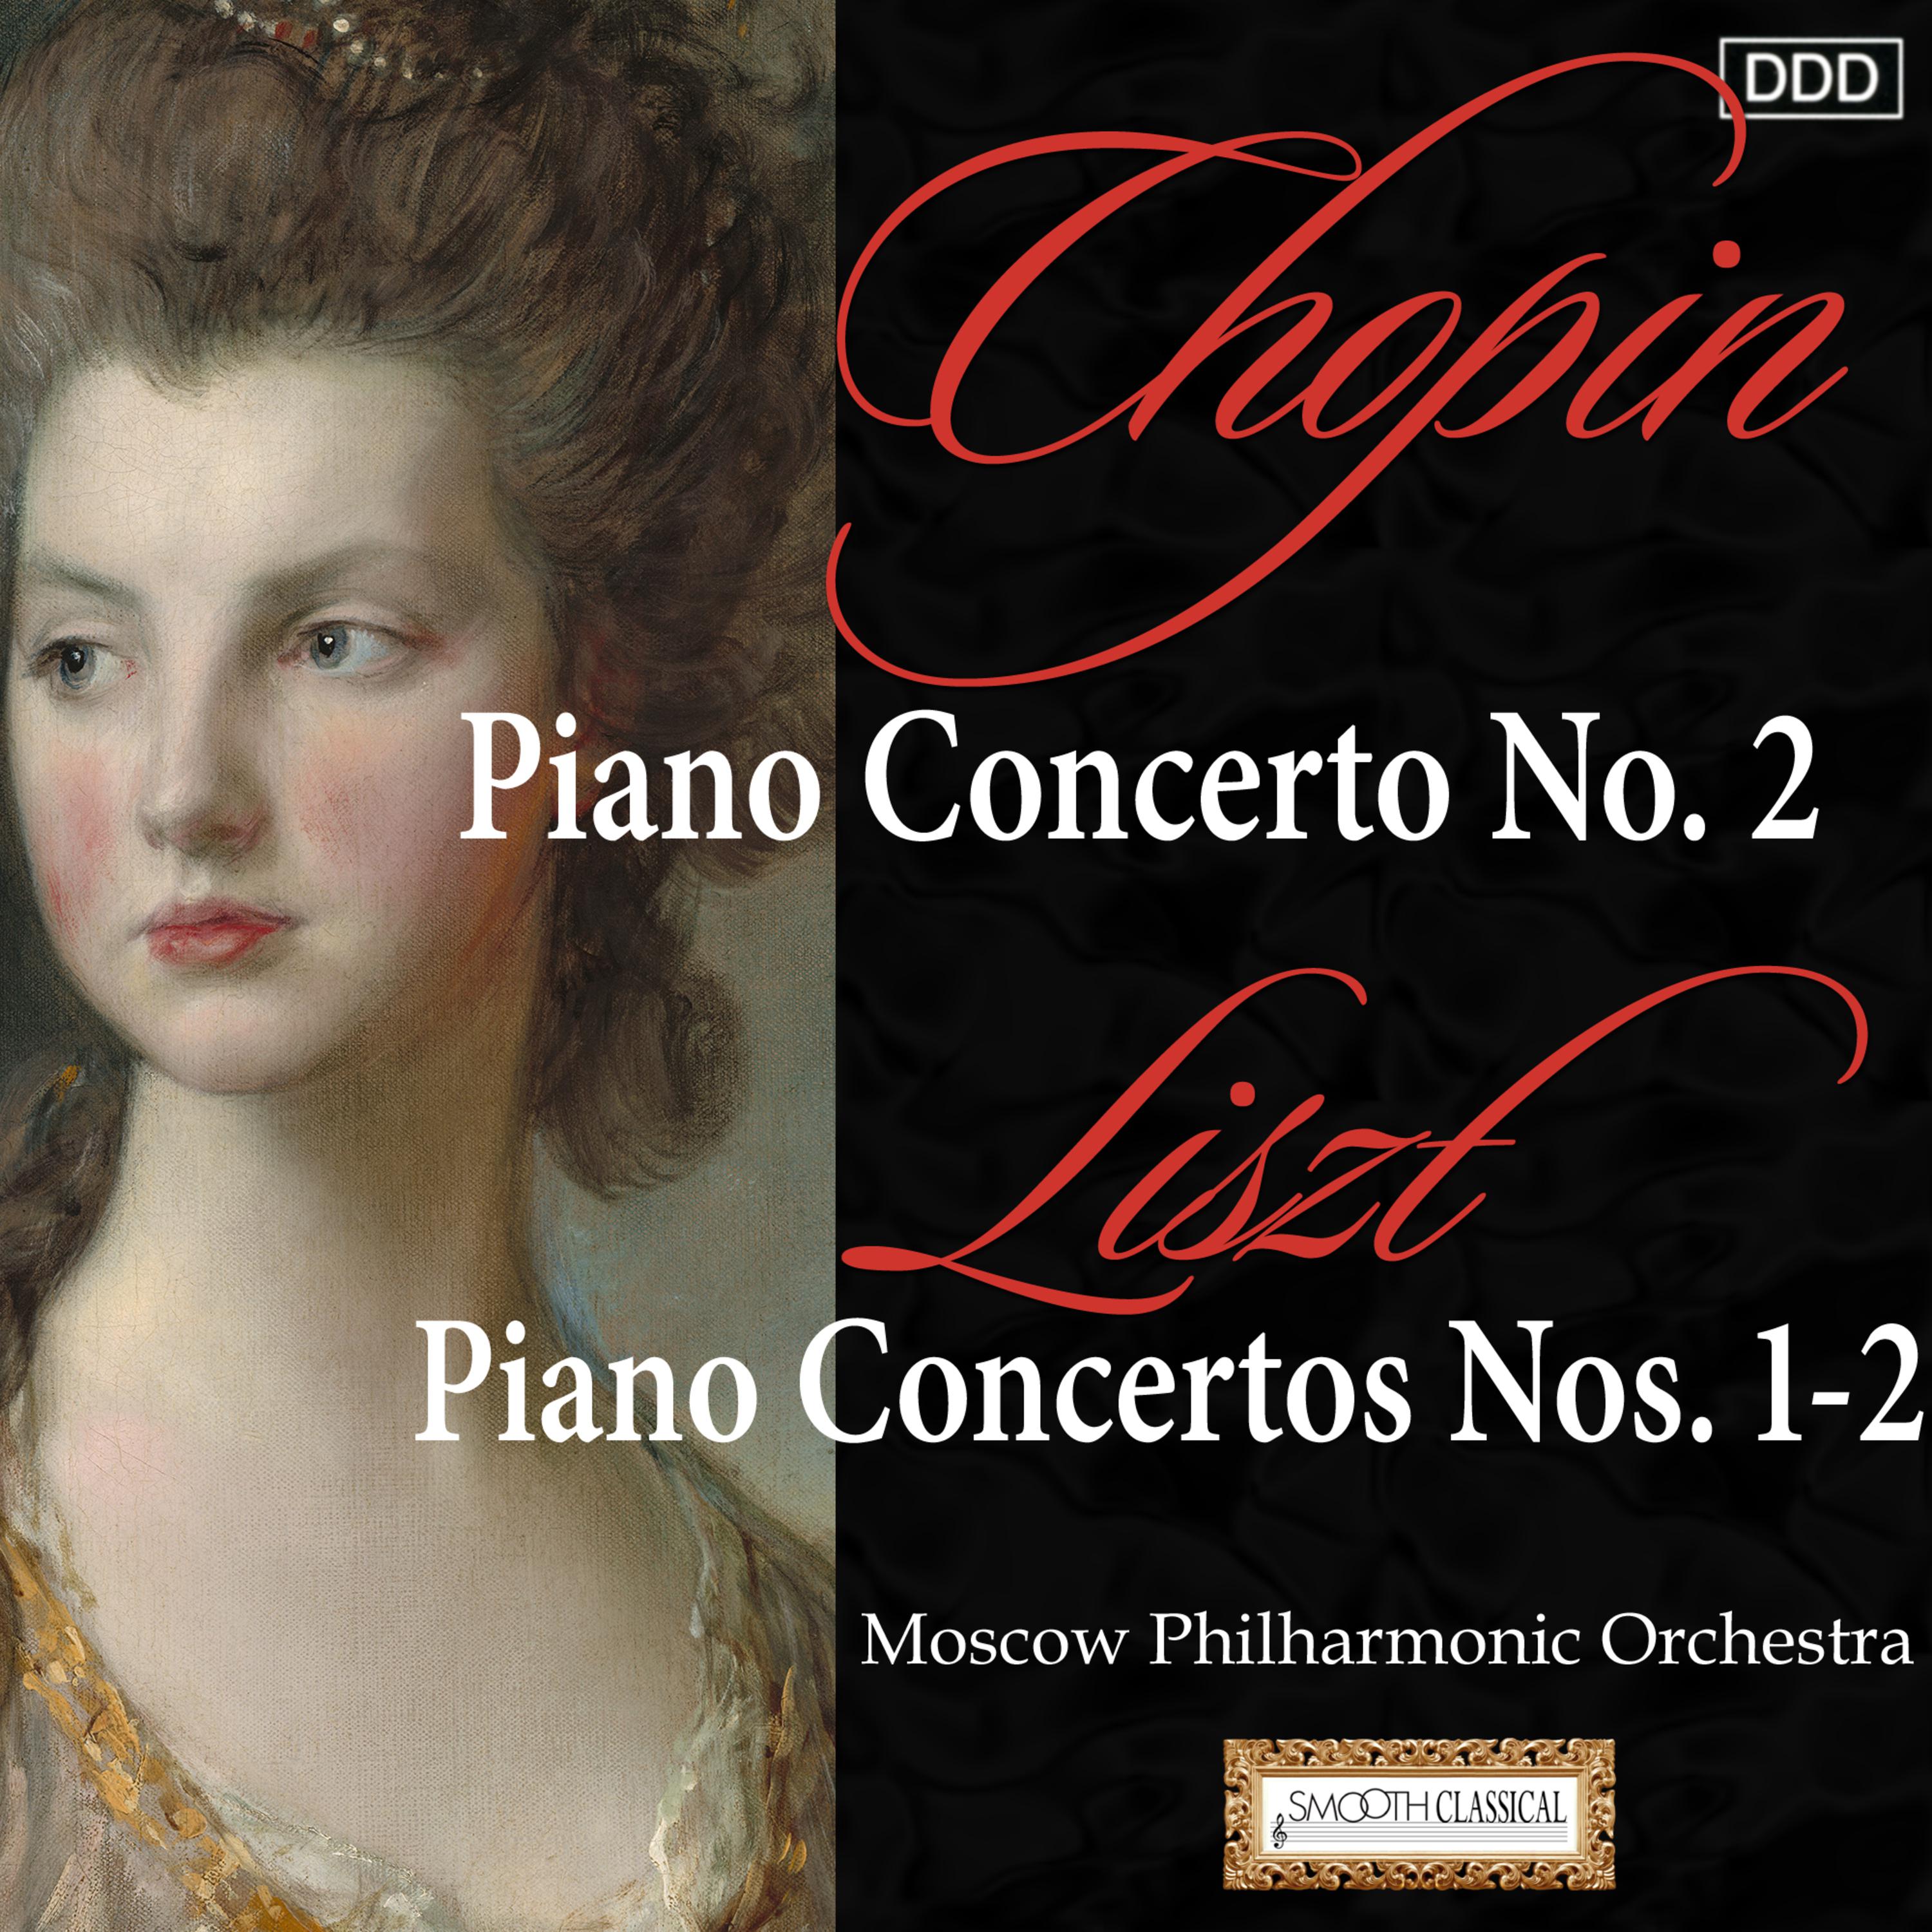 Chopin: Piano Concerto No. 2 - Liszt: Piano Concertos Nos. 1-2